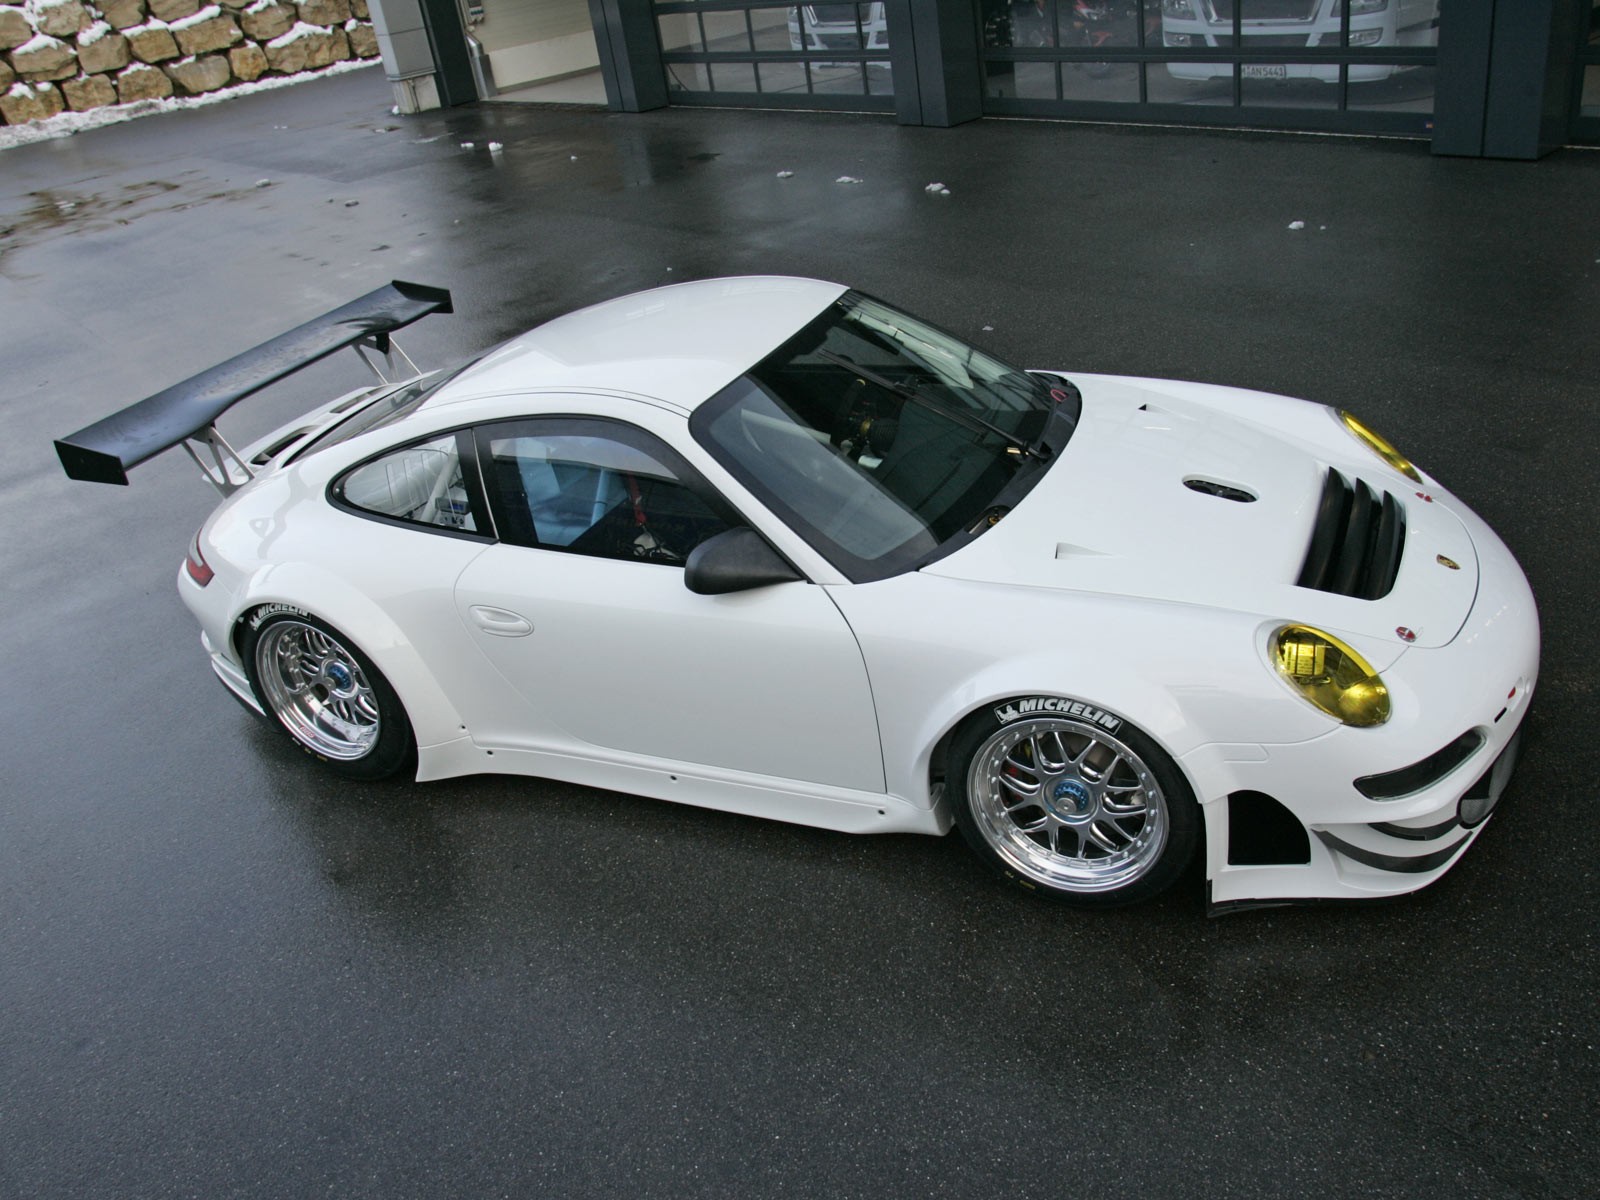 Порше спорткар. Порше 911 белый. Porsche 911 gt3 RSR белый. Спорткар Porsche 911. Porshe 911 gt3 RSR.